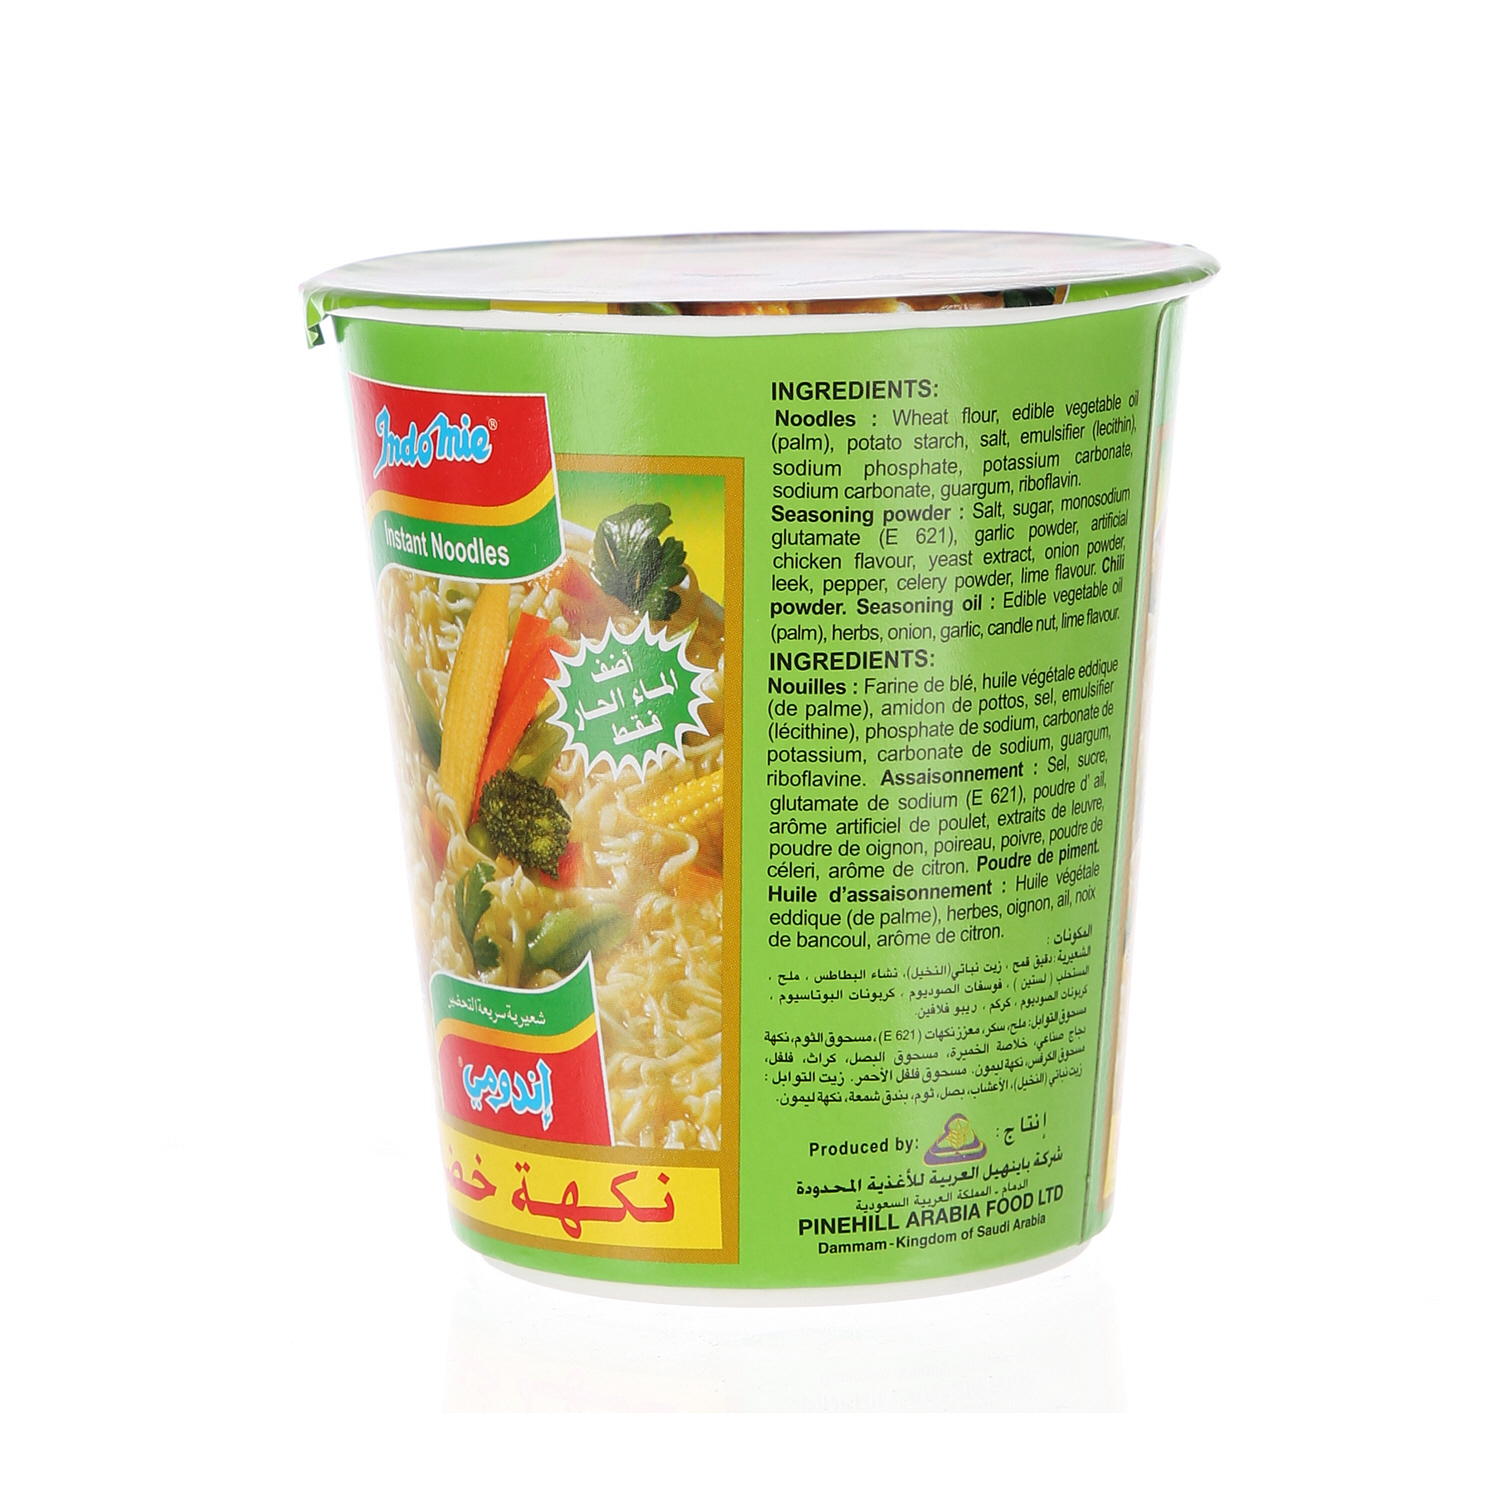 Indomie Noodles Cup Vegetable Flavor 60gm